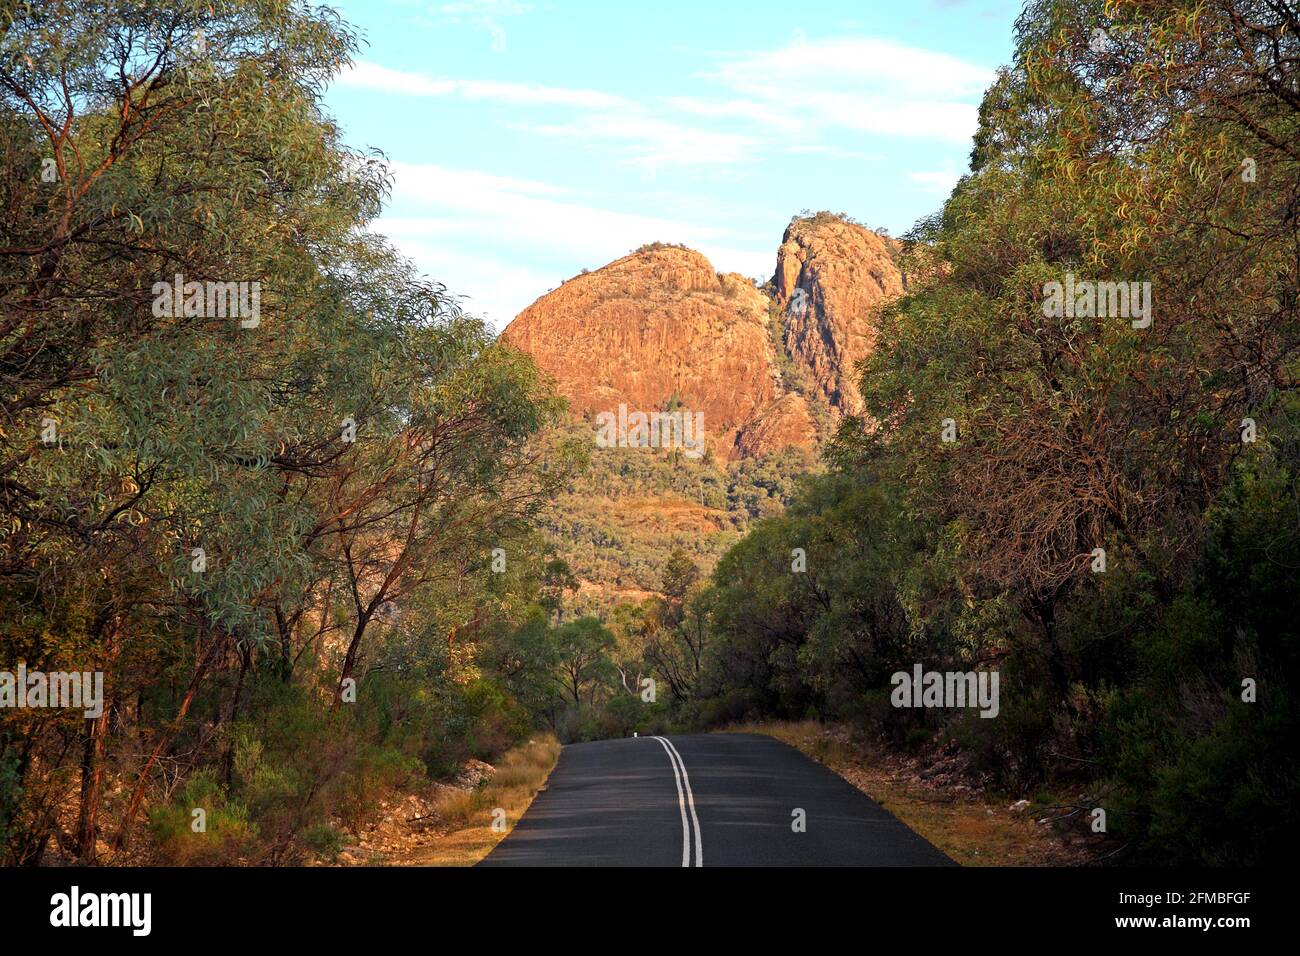 Belougery Split Rock, Warrumbungle National Park, near Coonabarrabran, western NSW, Australia. Stock Photo